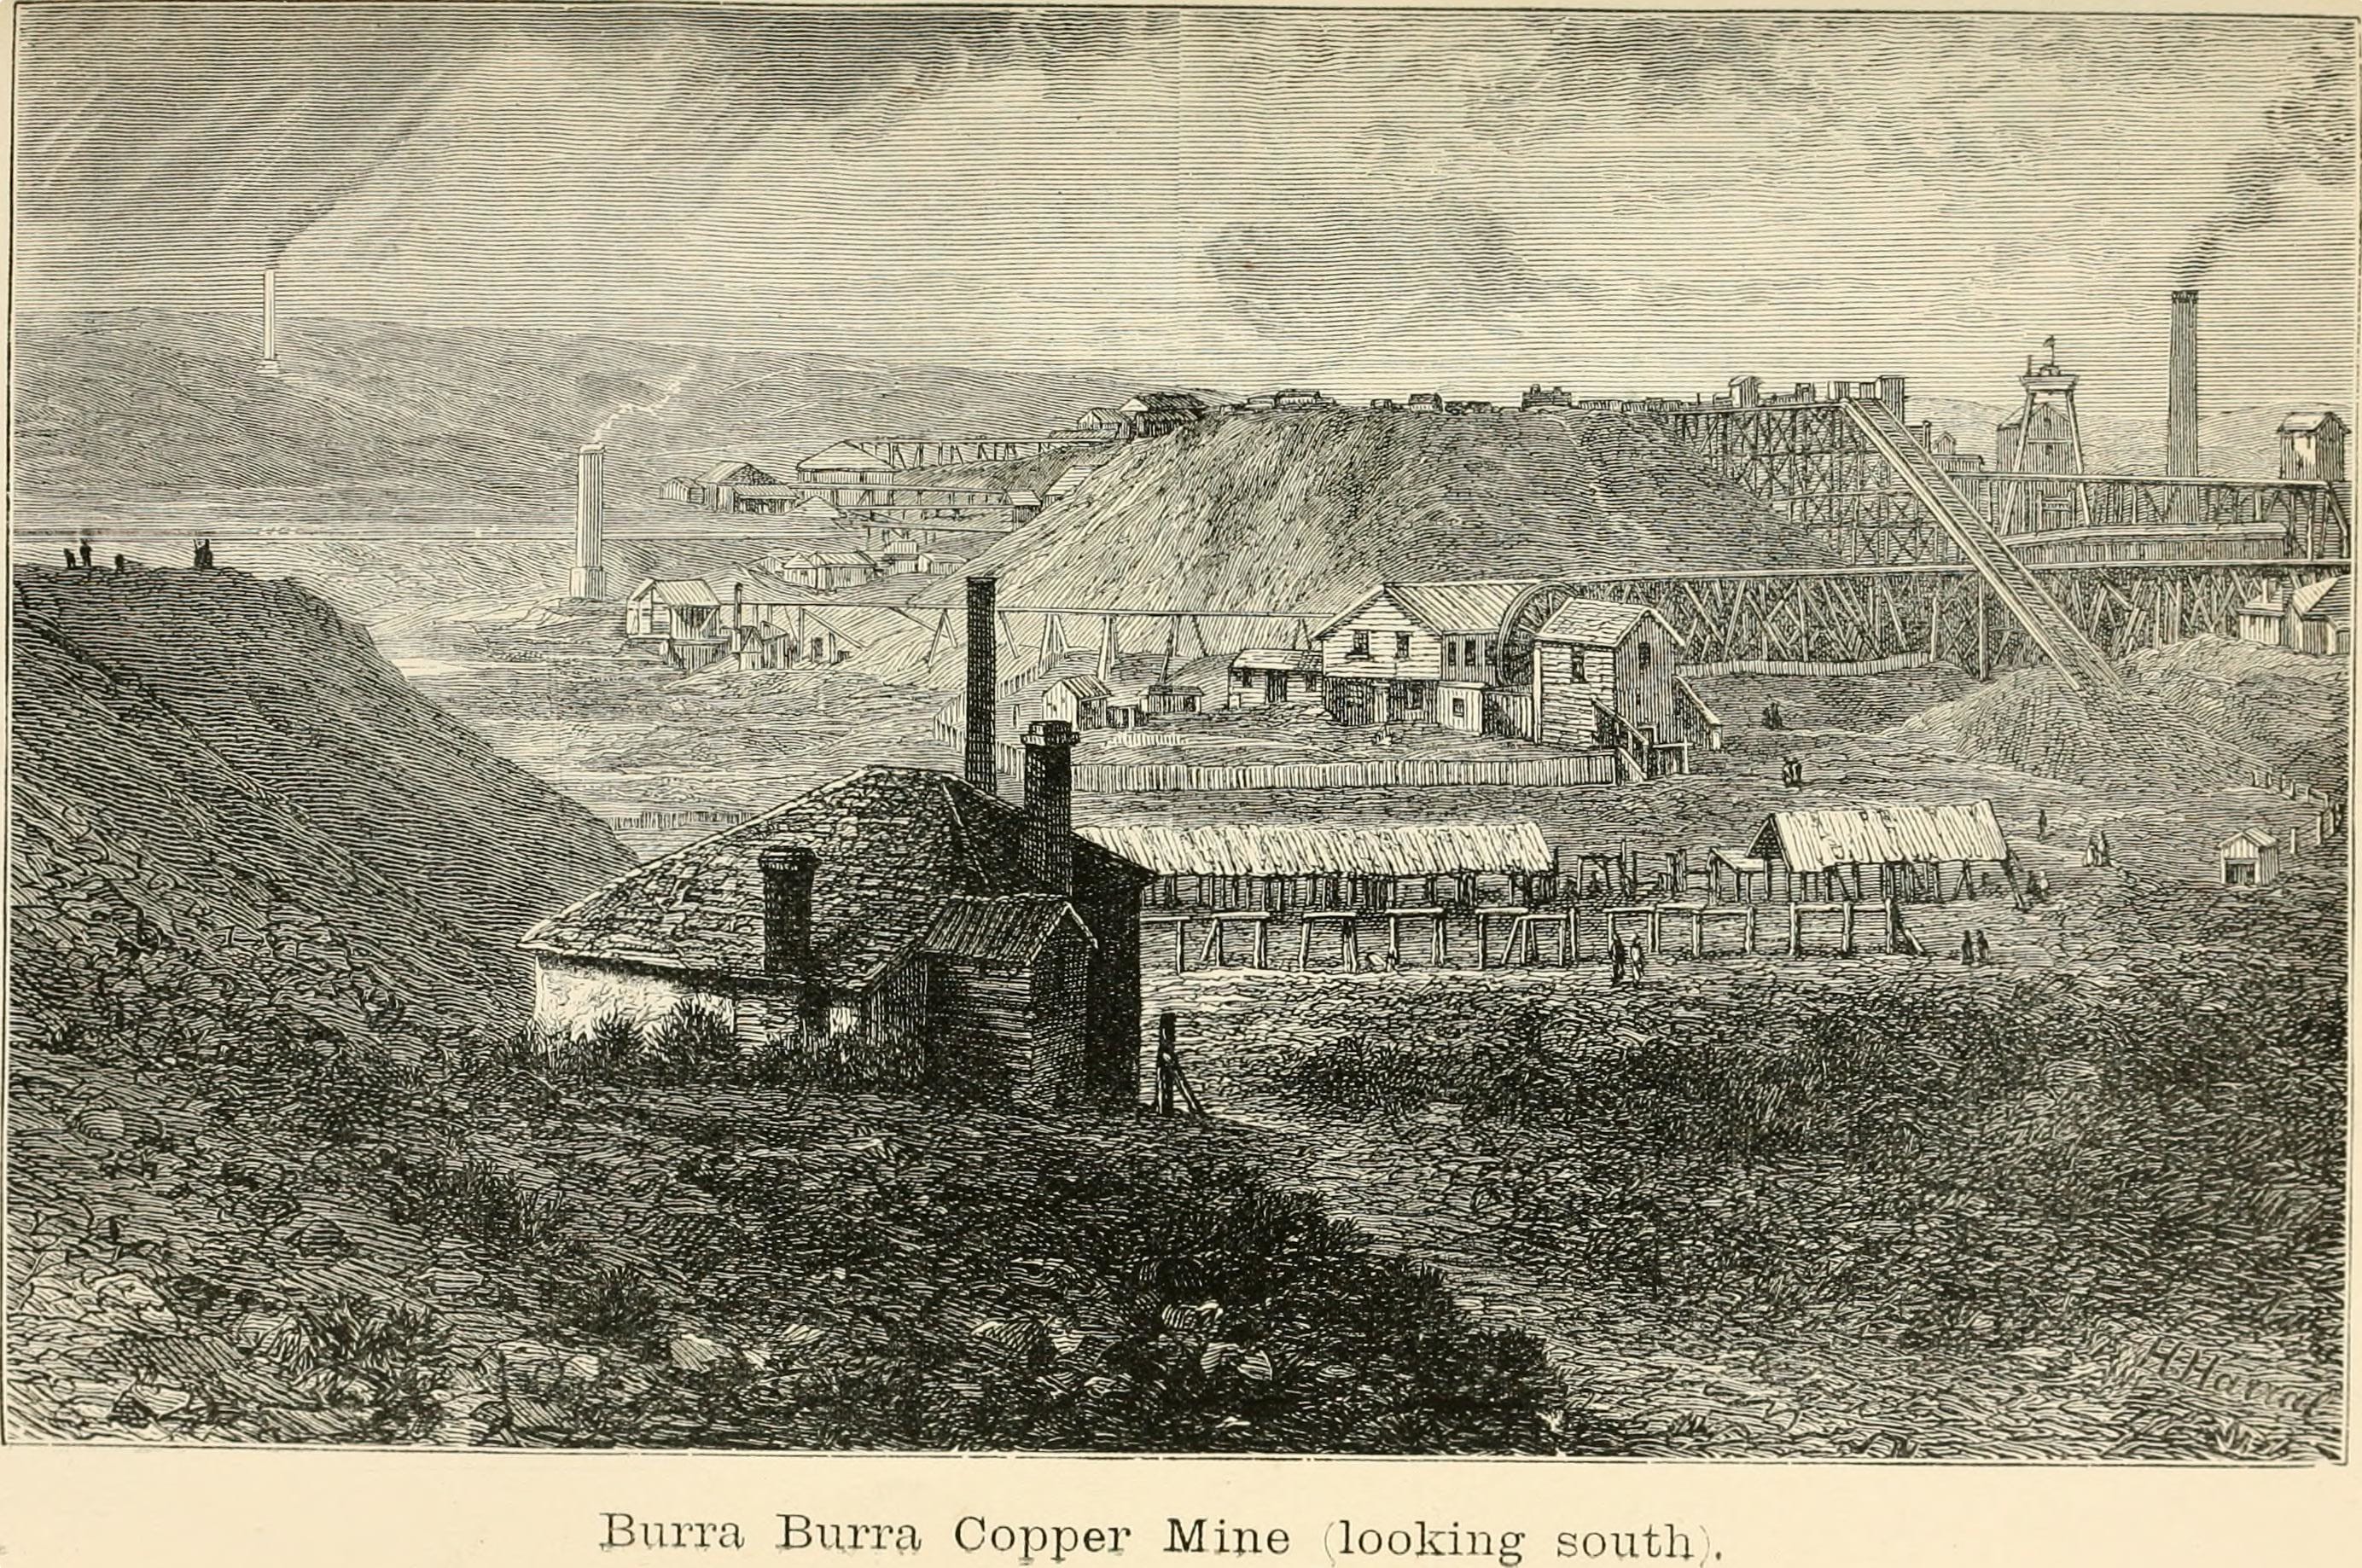 1883 drawing of the Burra Burra Mine.